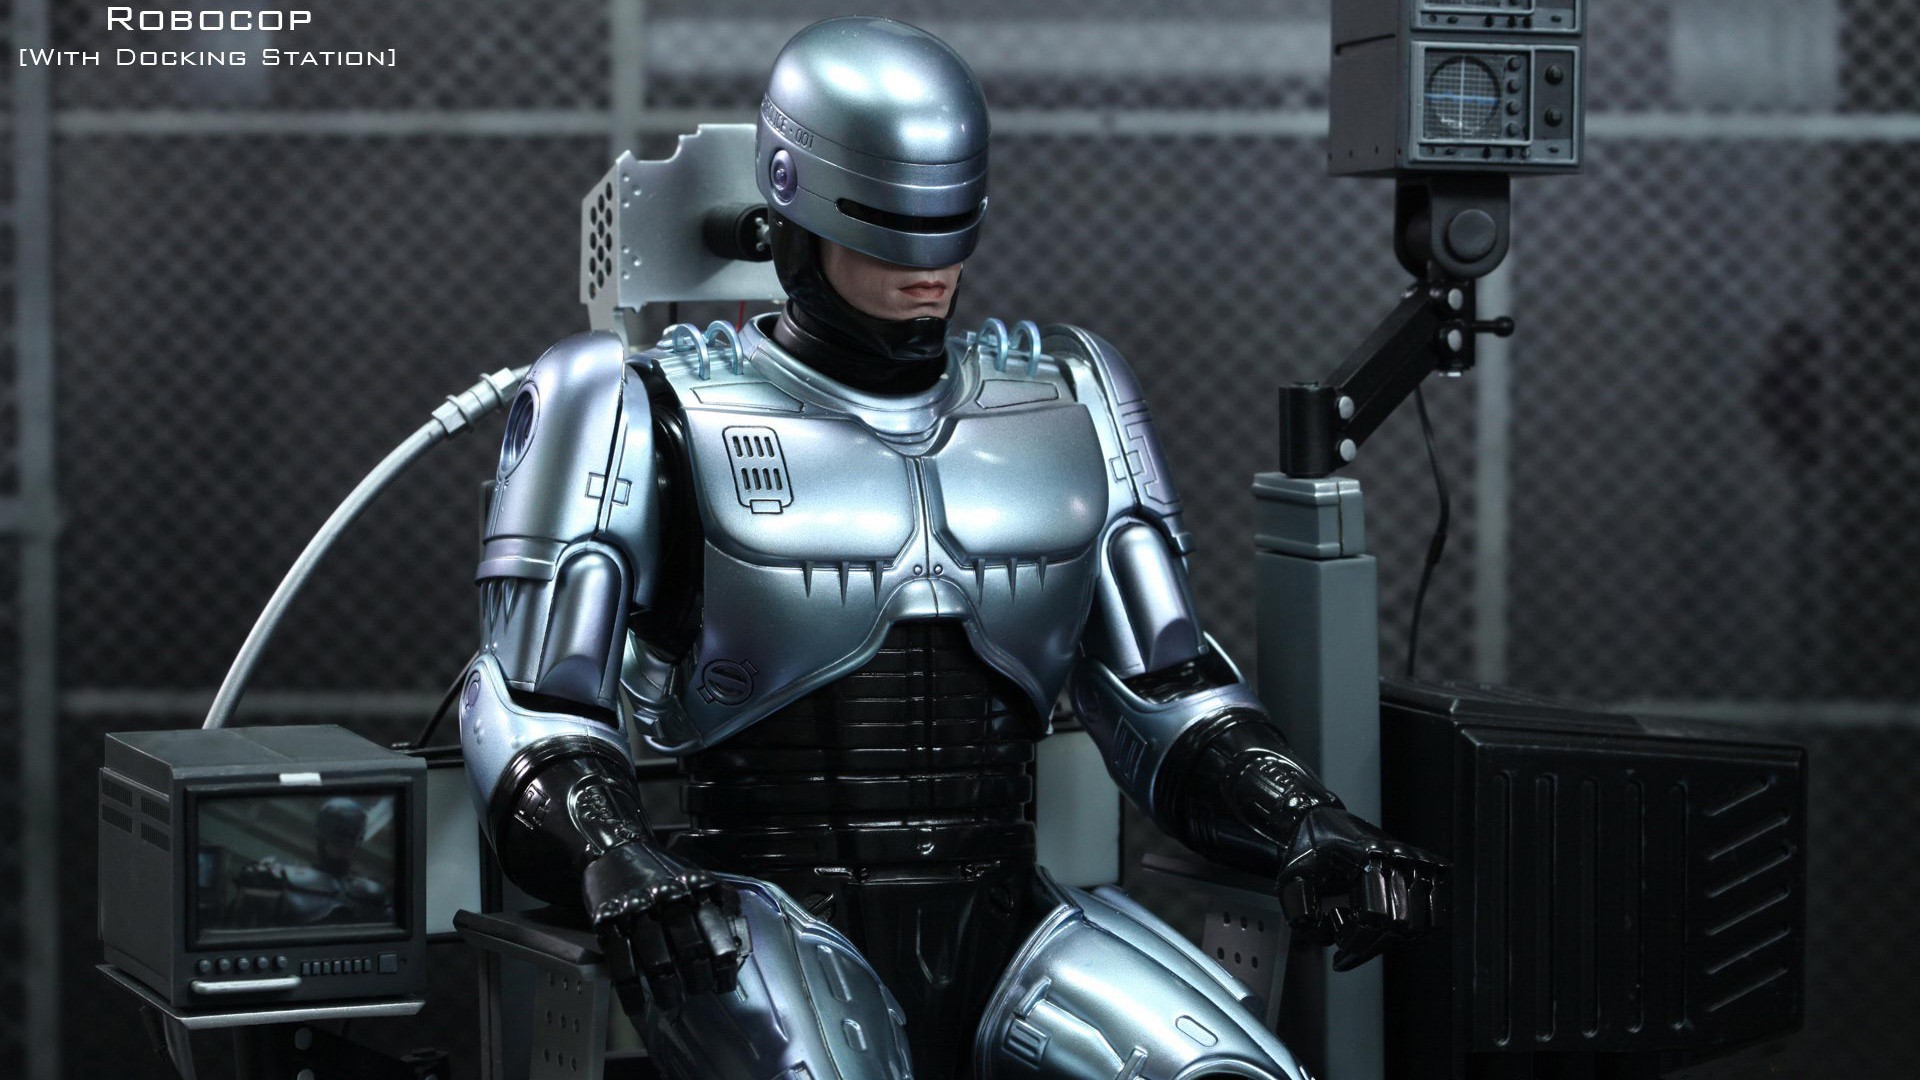 robocop, Robot, Sci fi, Cyborg, Robot, Cyborgs Wallpaper